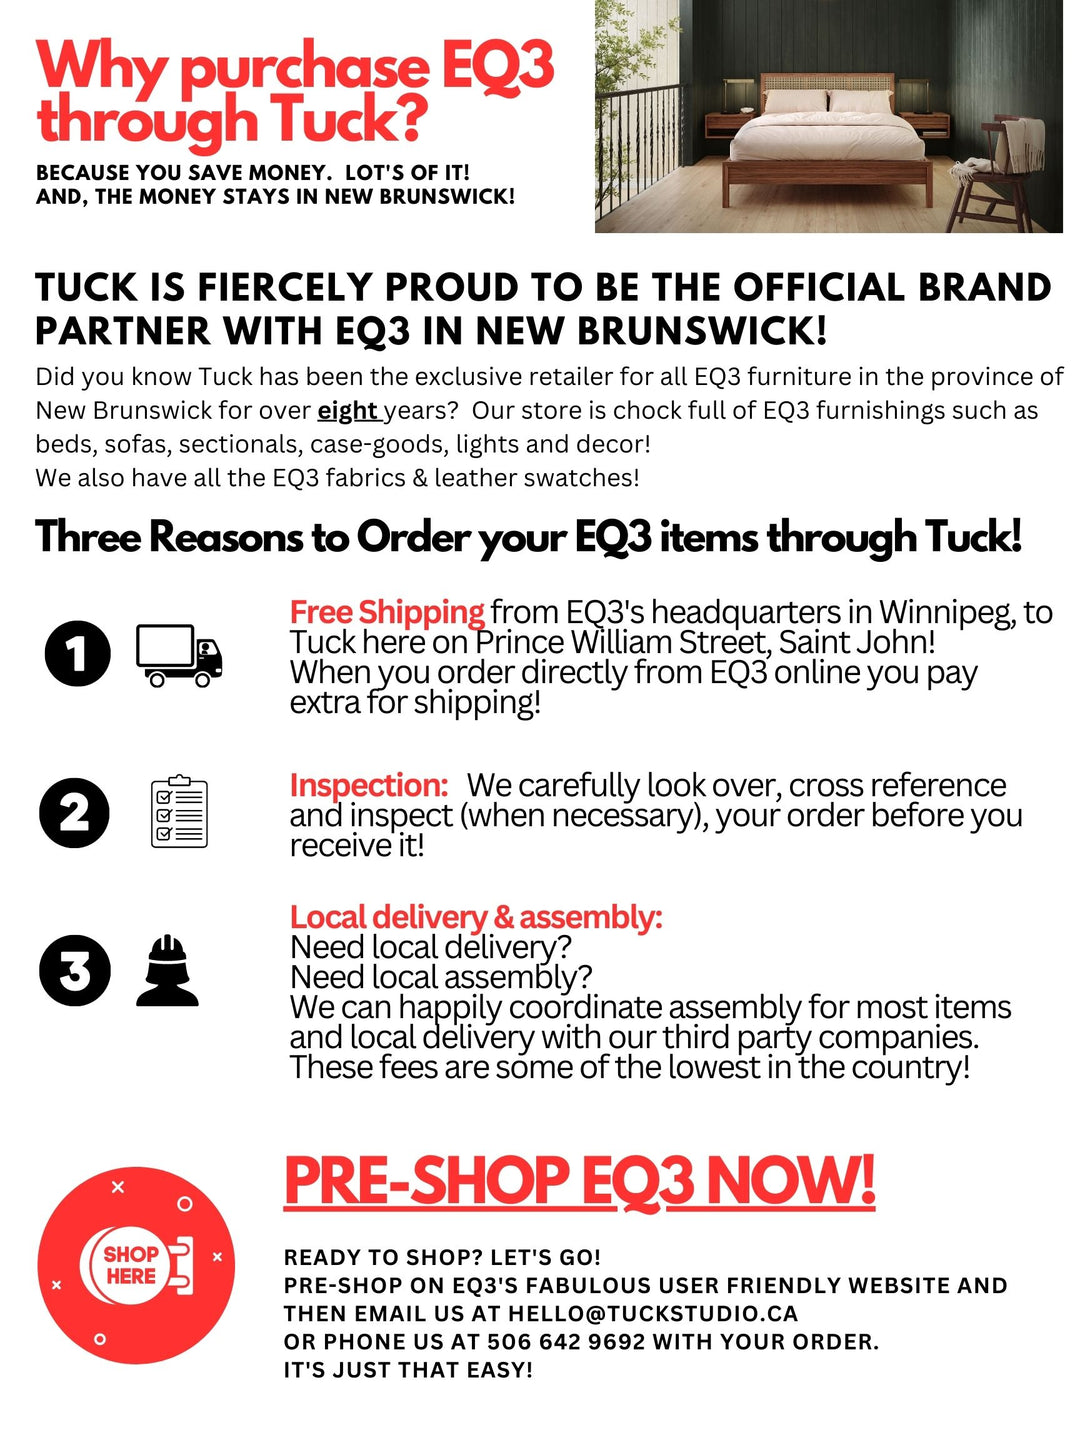 Purchase your EQ3 Ottoman through Tuck & Save Money!